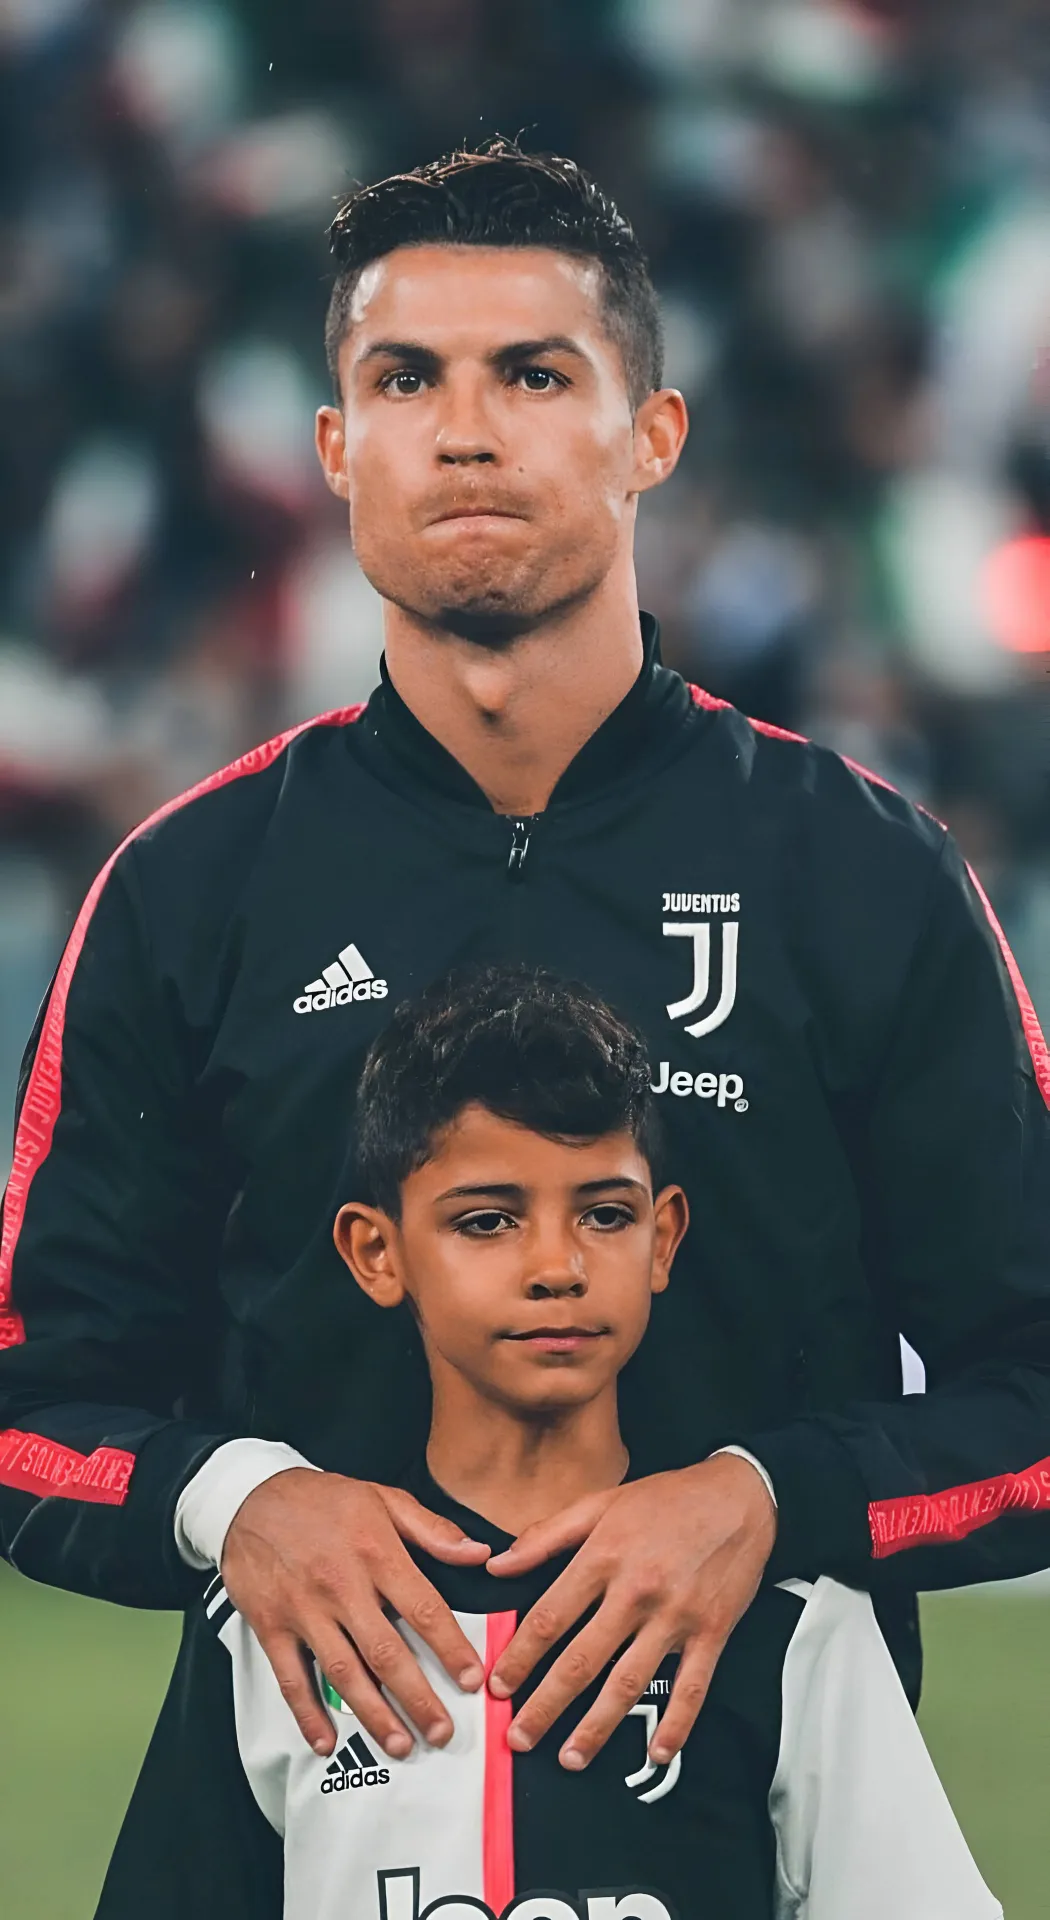 thumb for Cristiano Ronaldo Wallpaper With Son